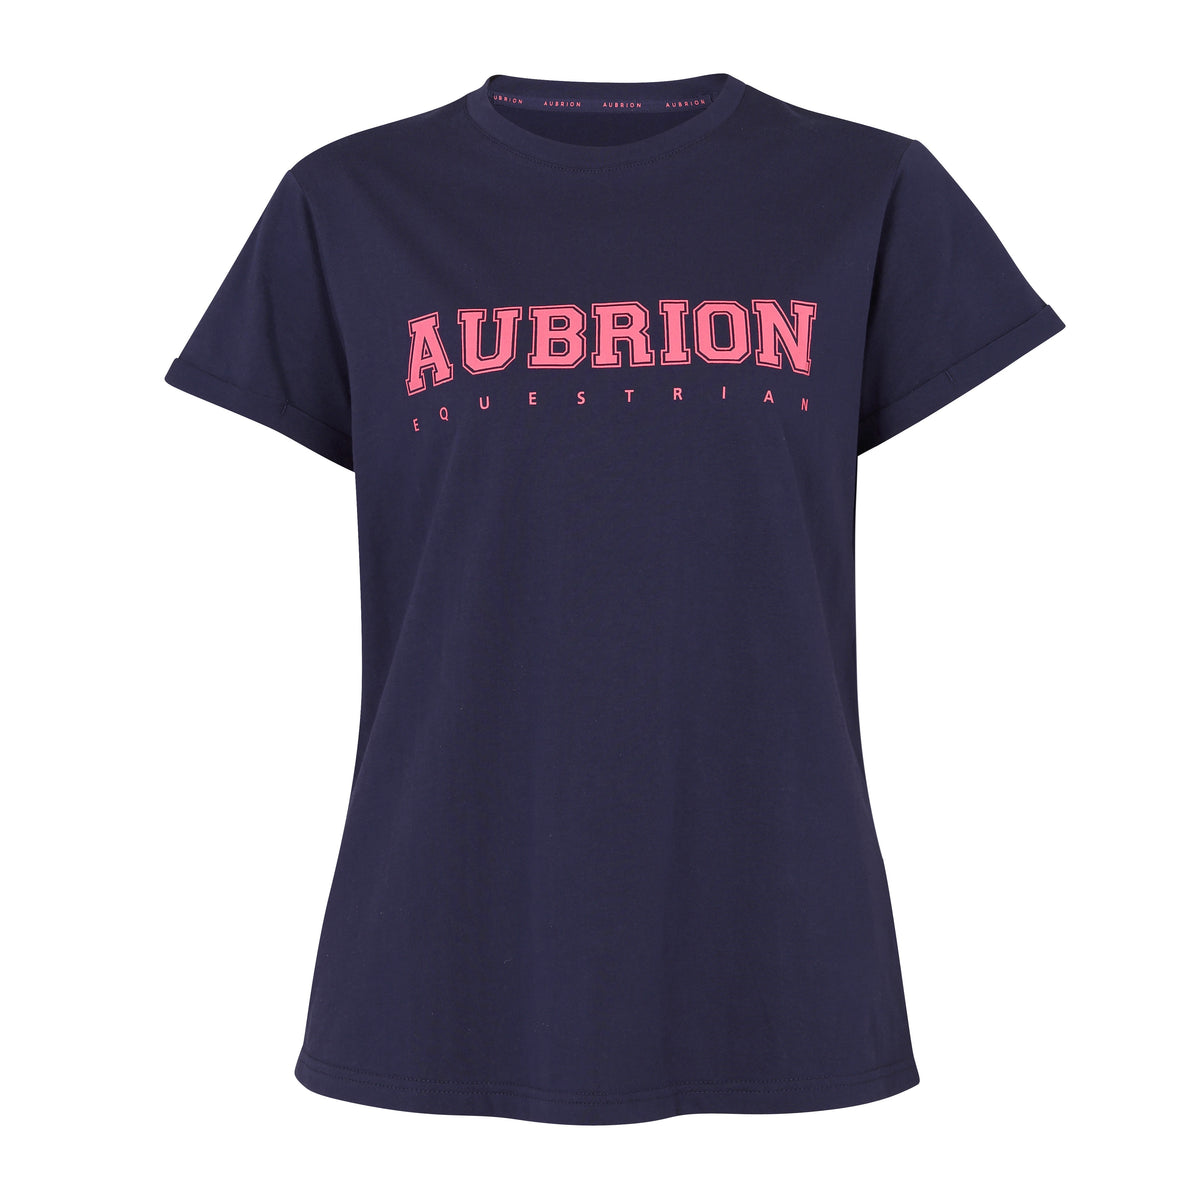 Shires Ladies Aubrion Repose T-Shirt